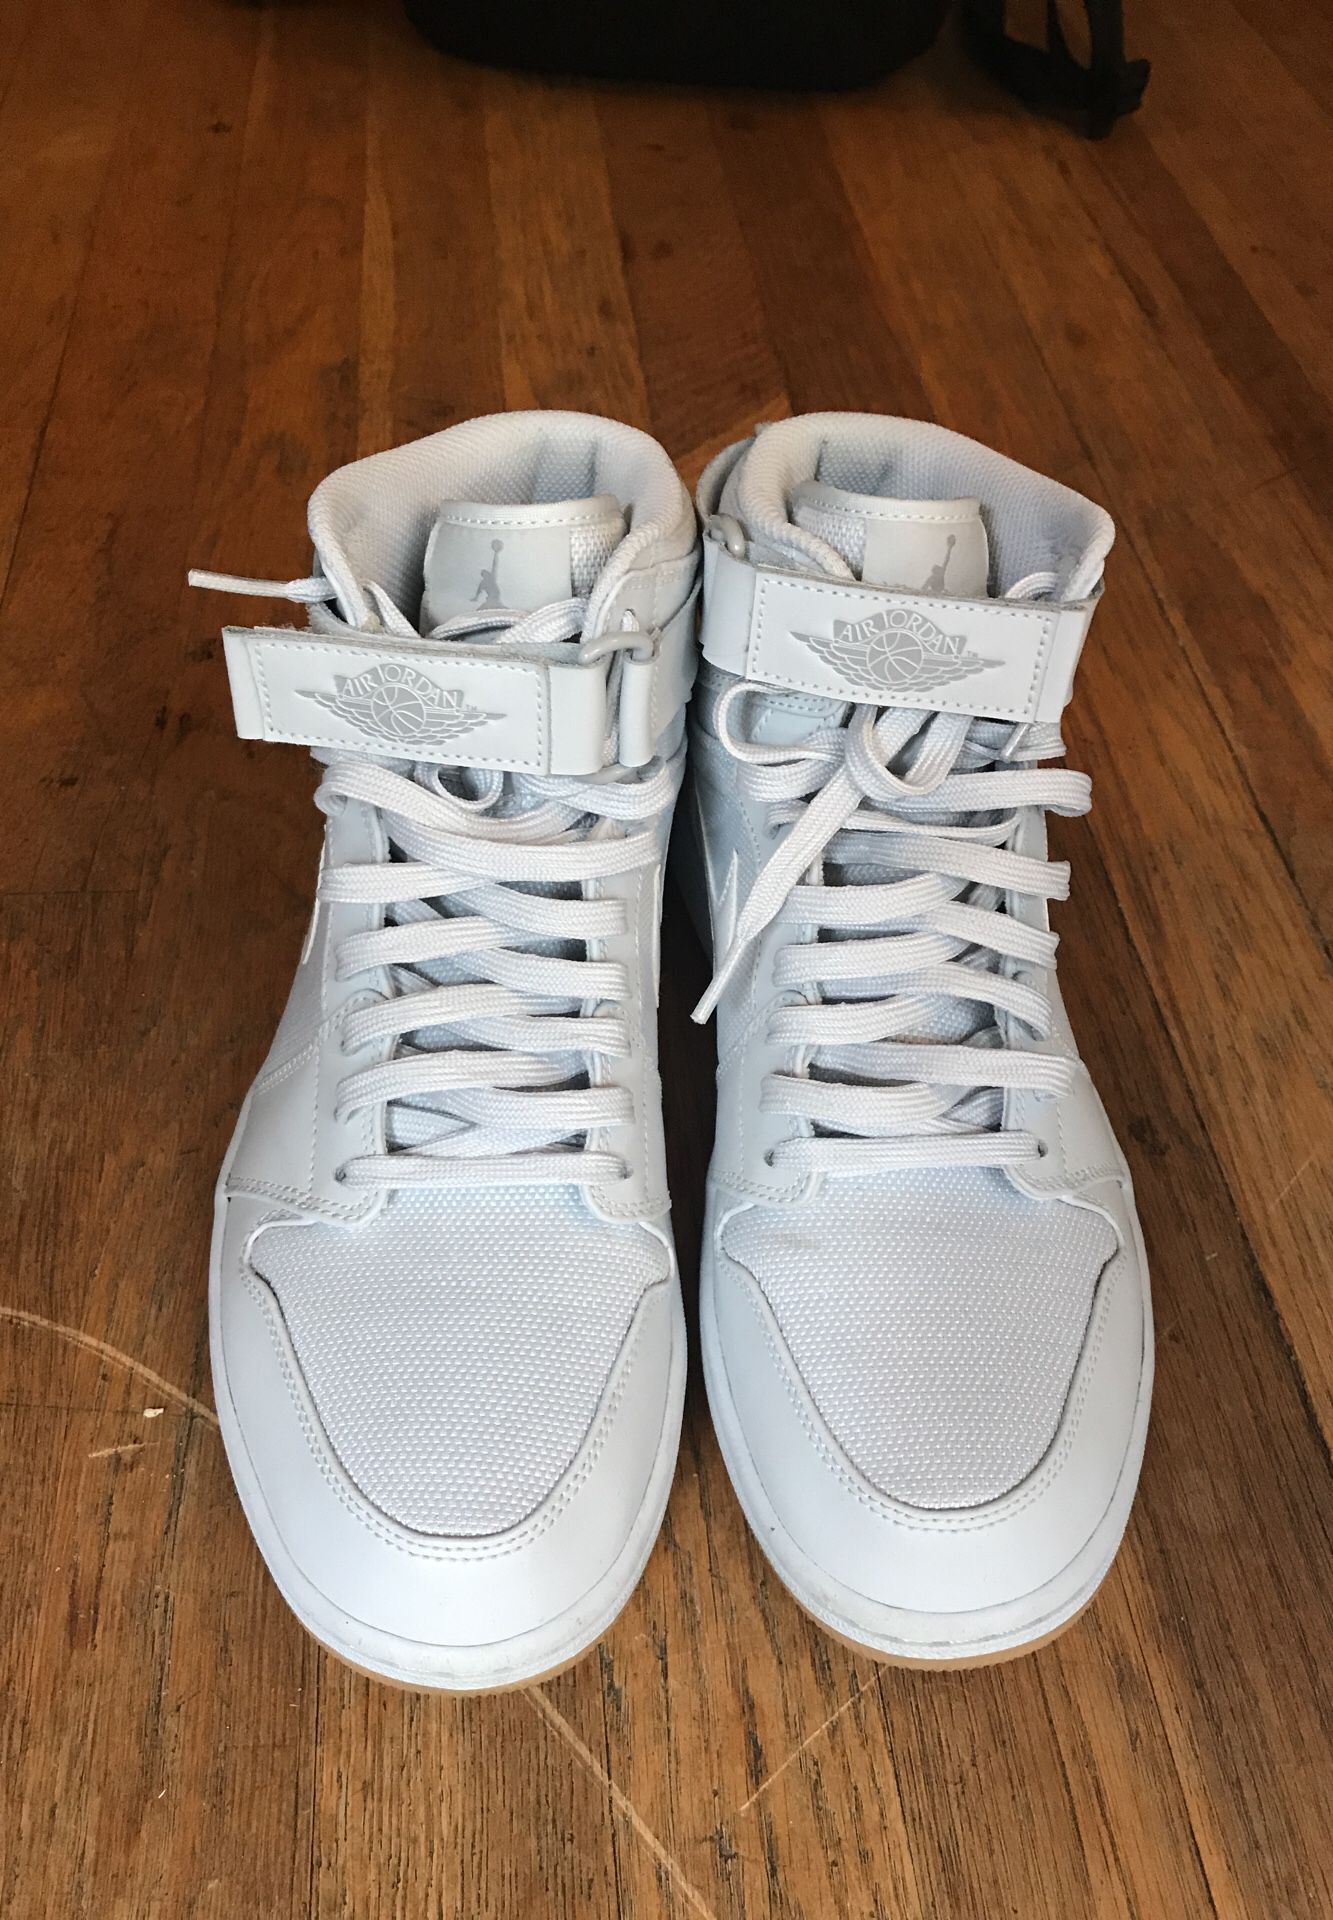 Nike Air Jordan’s 1 High Strap. Size 9.